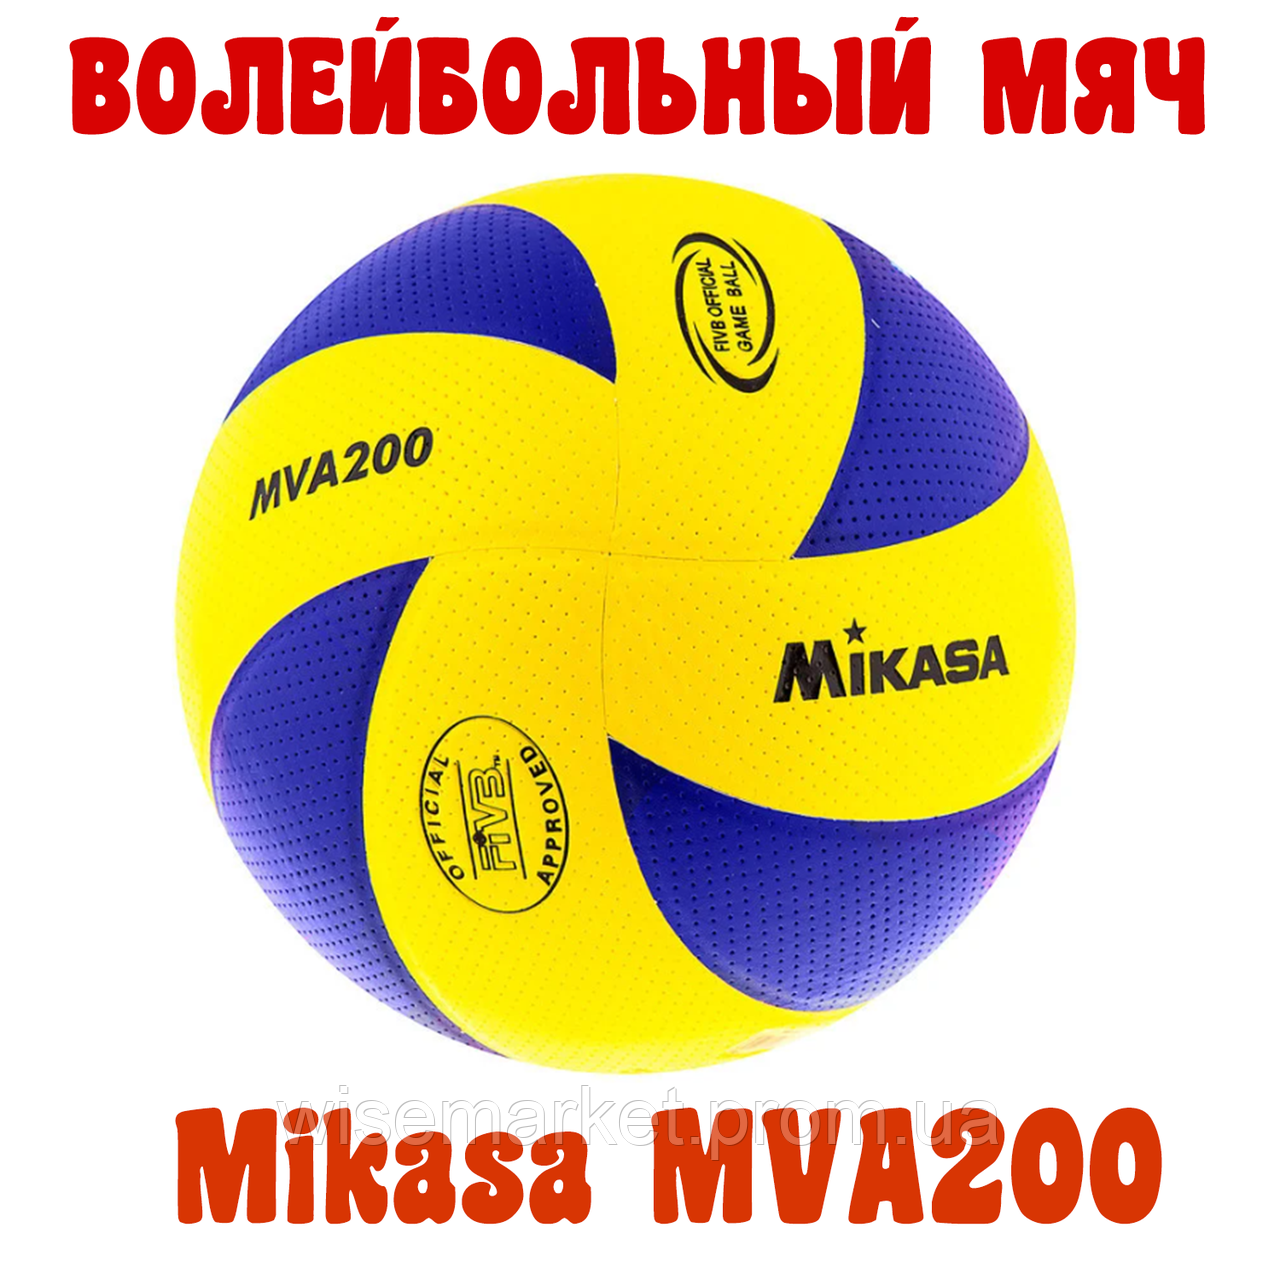 М'яч для волейболу Minkasa MVA200 | м'яч для пляжного волейболу | волейбольний м'яч